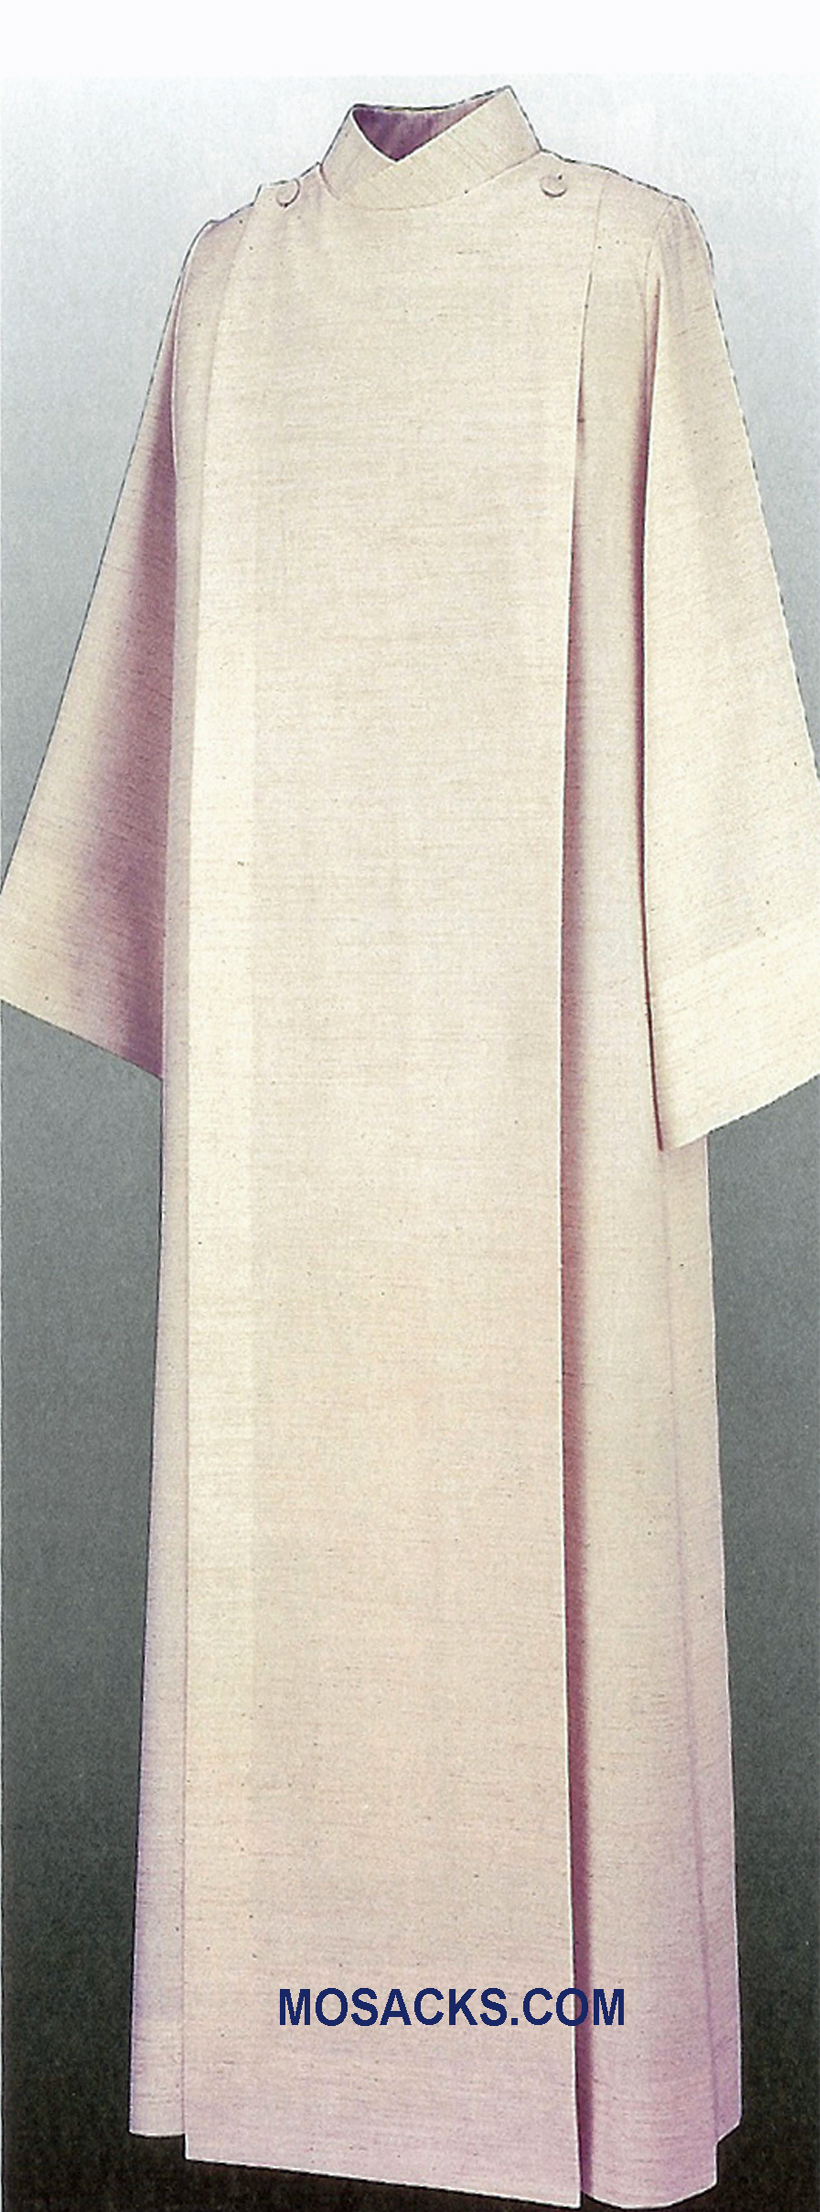 Slabbinck Alb in White or Beige Pius Fabric, Style 11